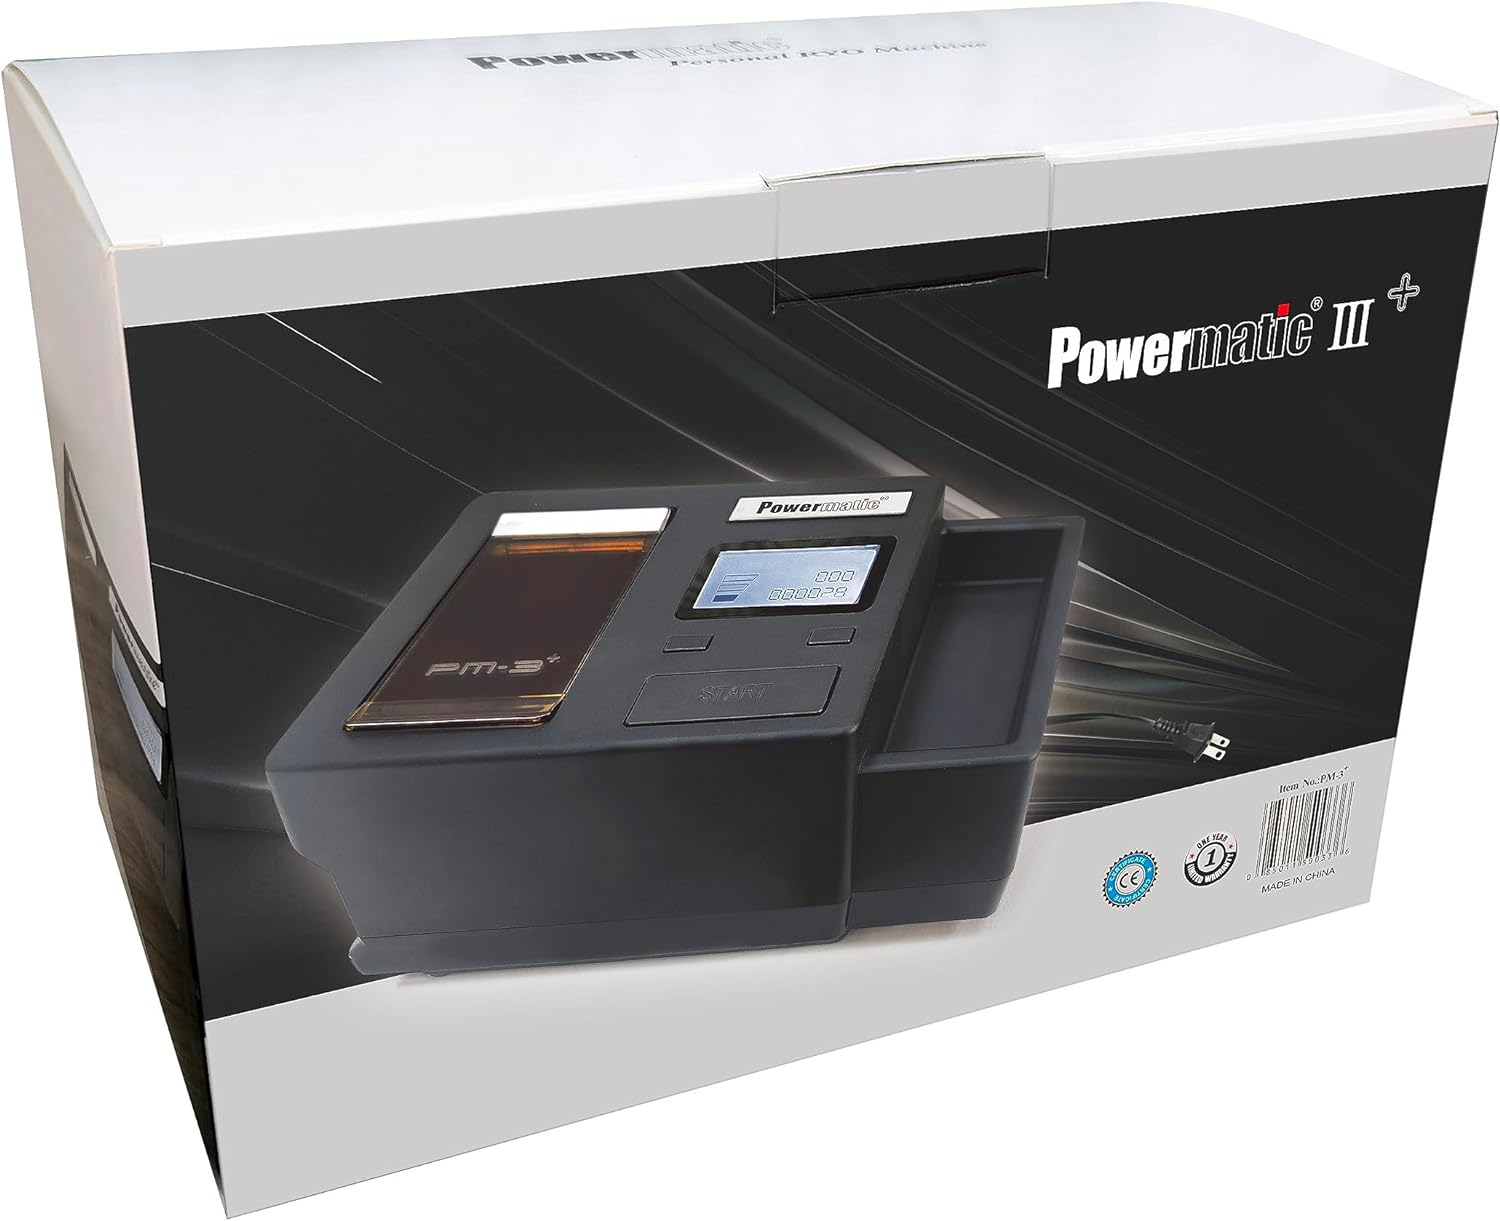 Powermatic 3 Plus - Maquina entubar eléctricos 